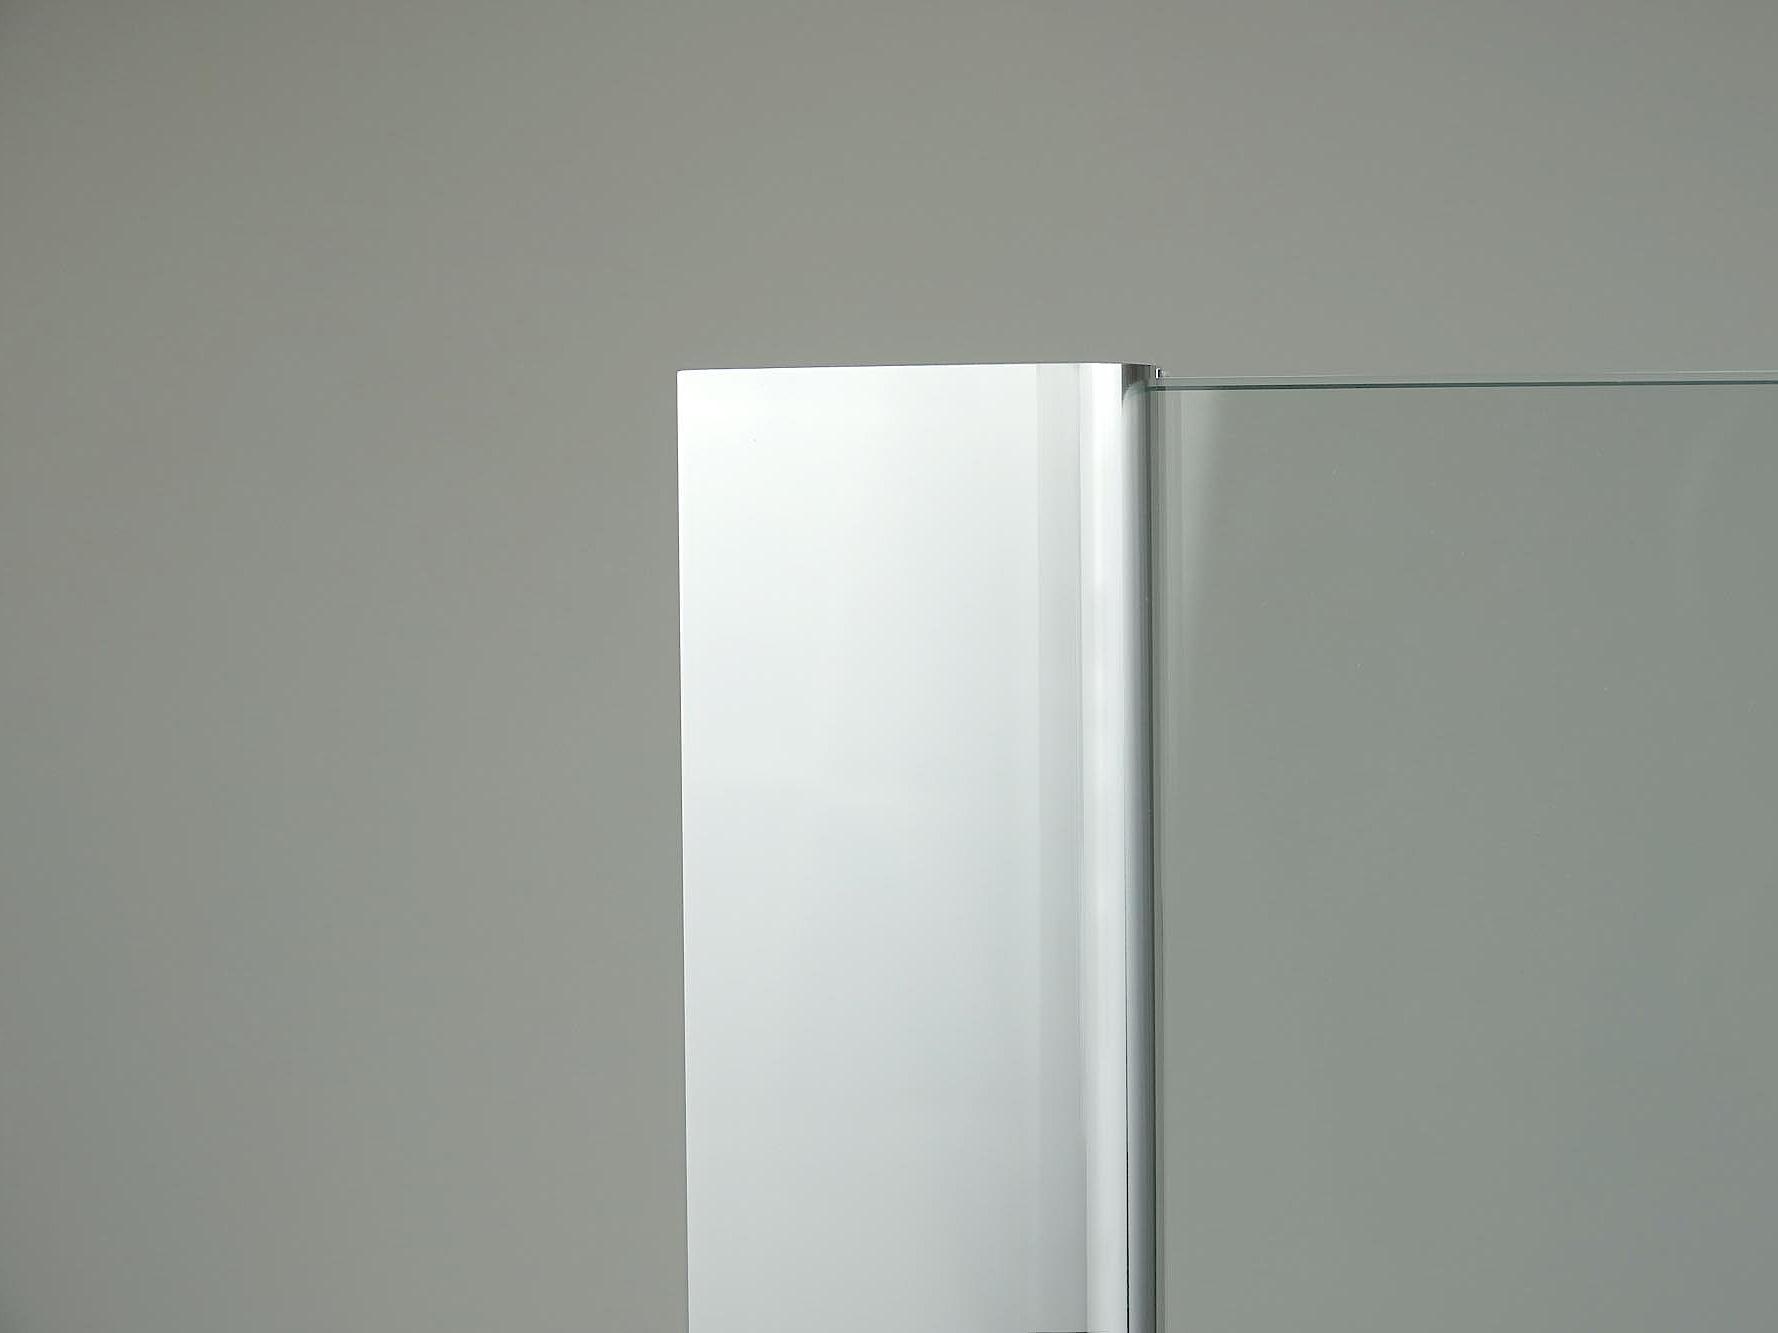 Kermi shower enclosure, wall profile surface High-Gloss Silver